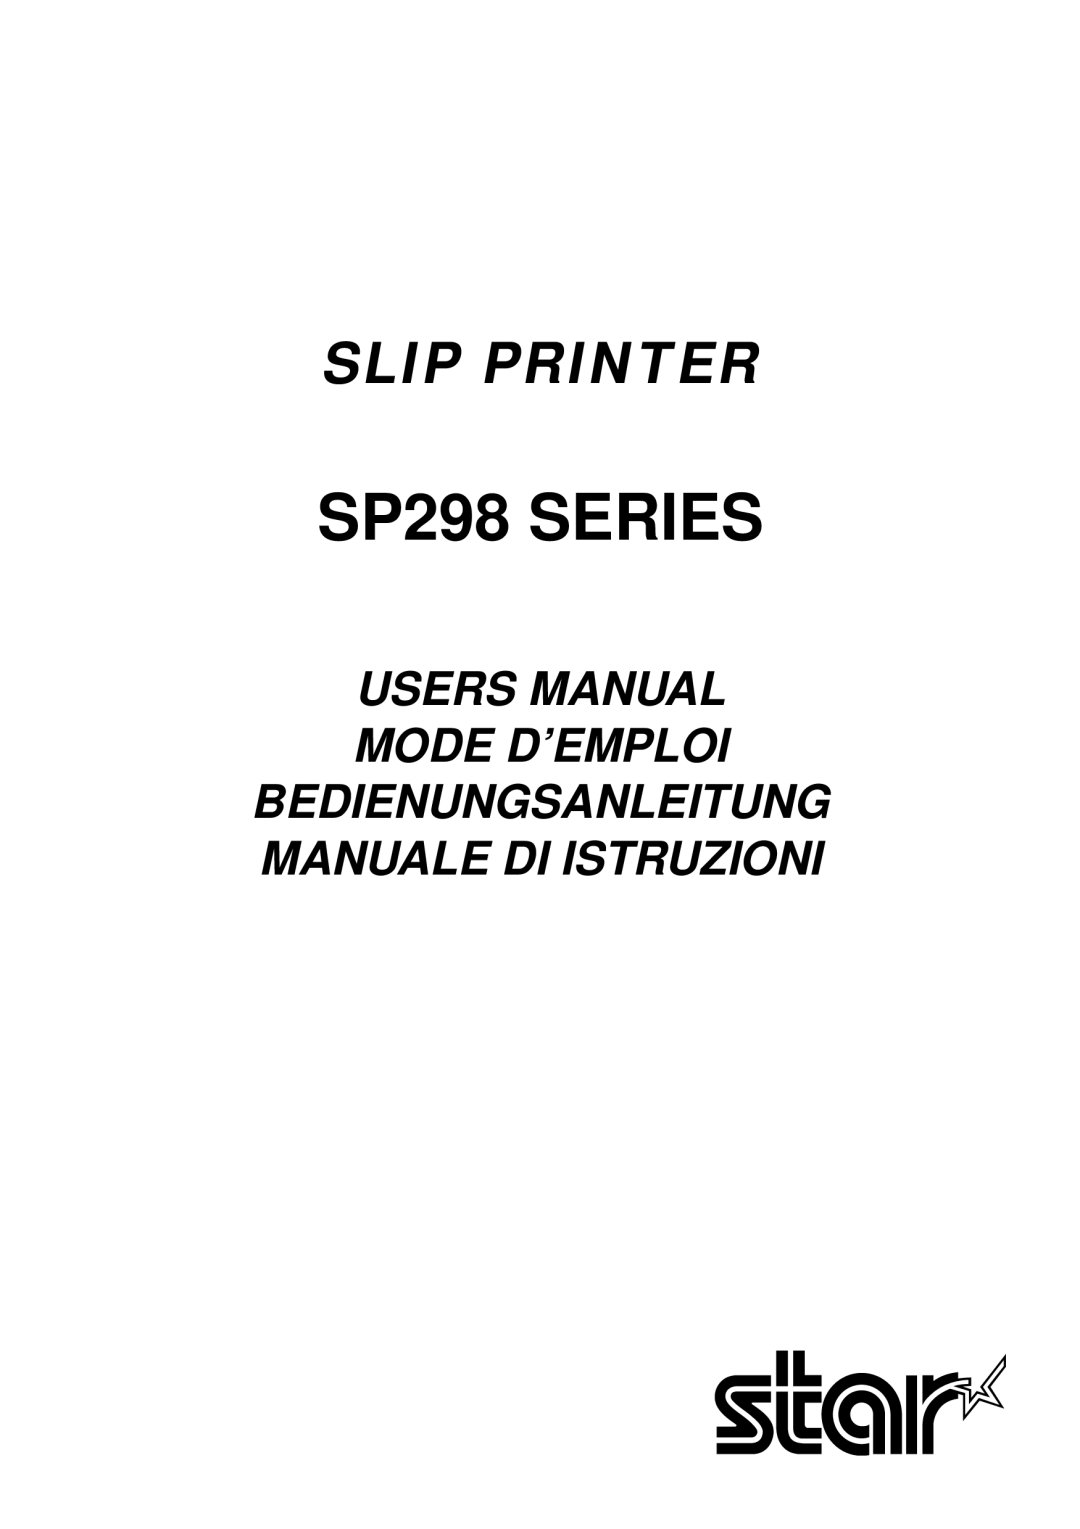 Star Micronics user manual SP298 SERIES, Slip Printer 